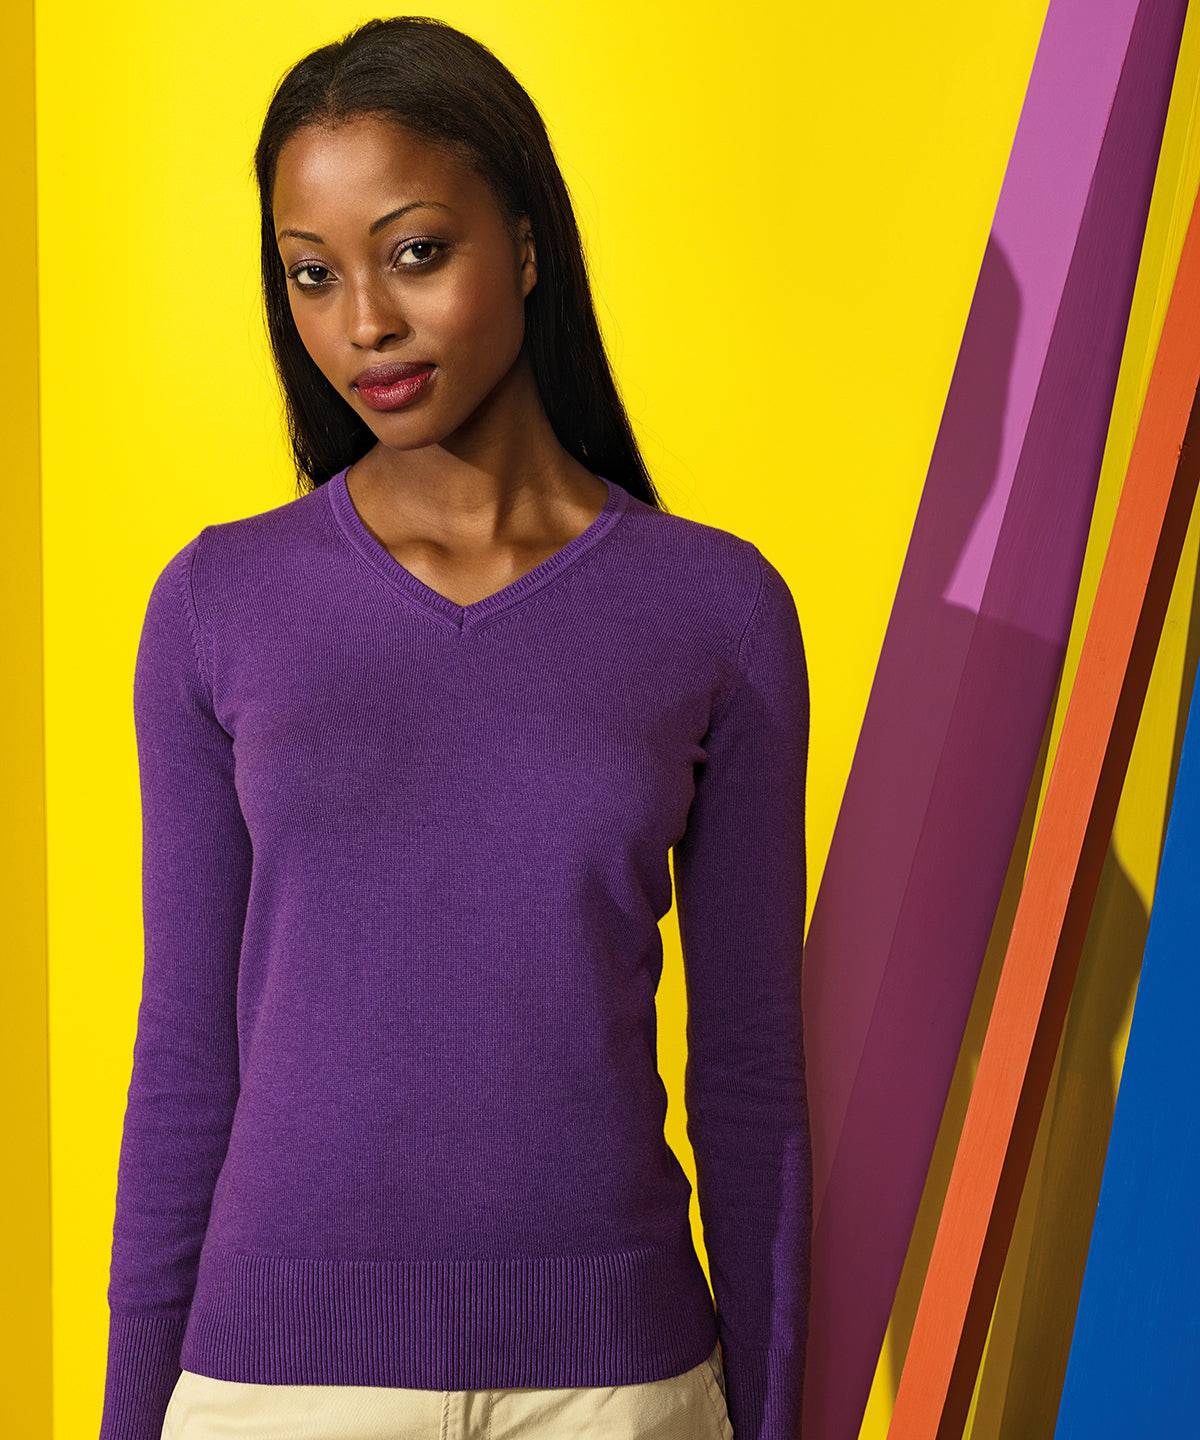 Black - Women's cotton blend v-neck sweater